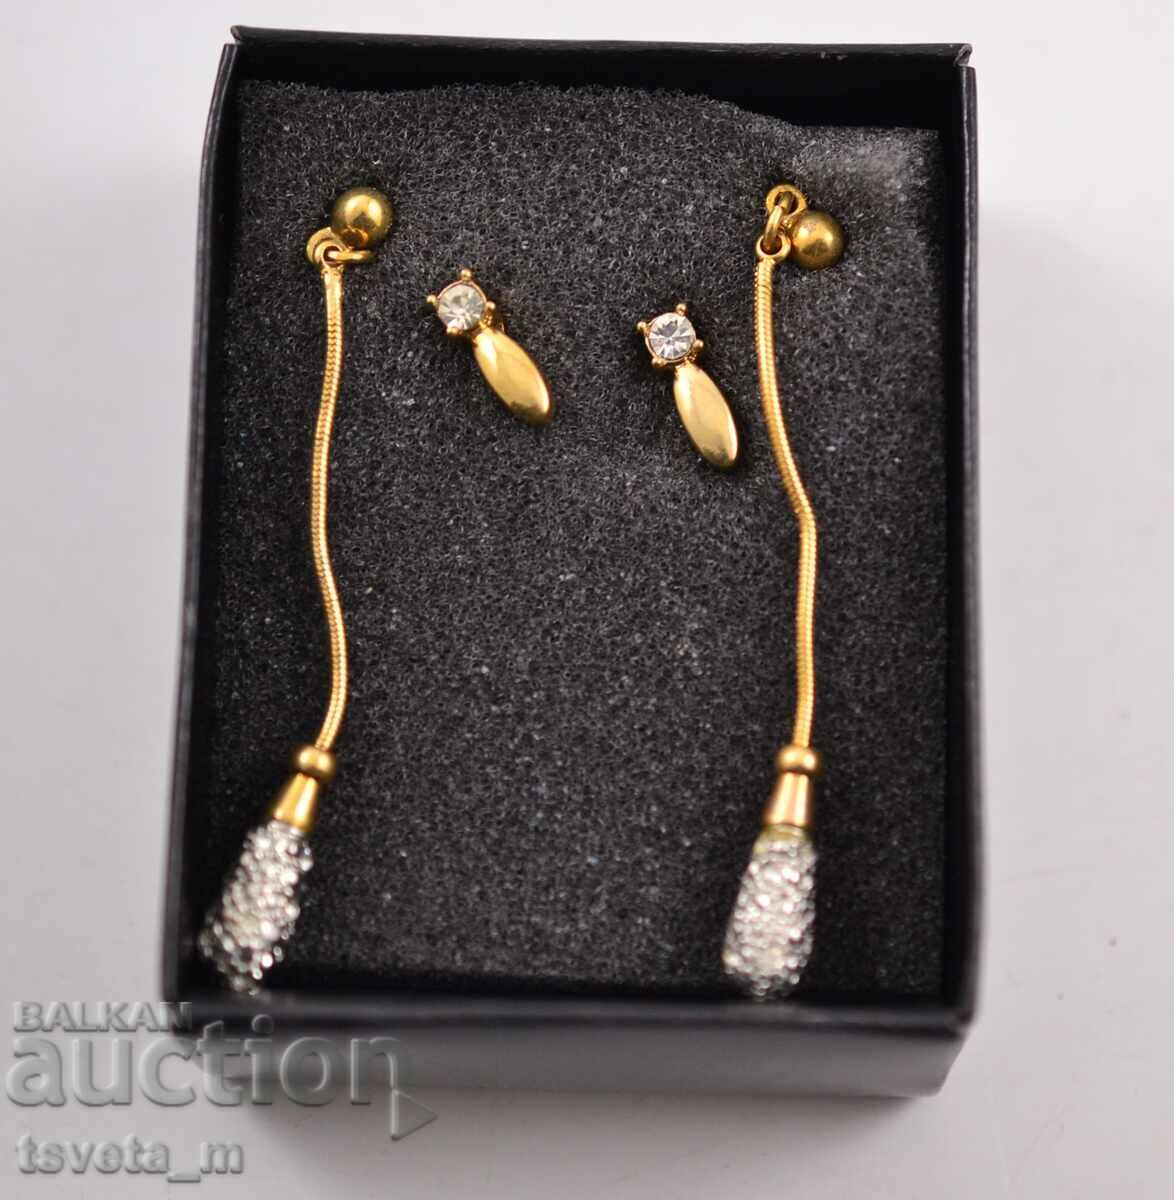 Earrings, jewelry 2 pairs